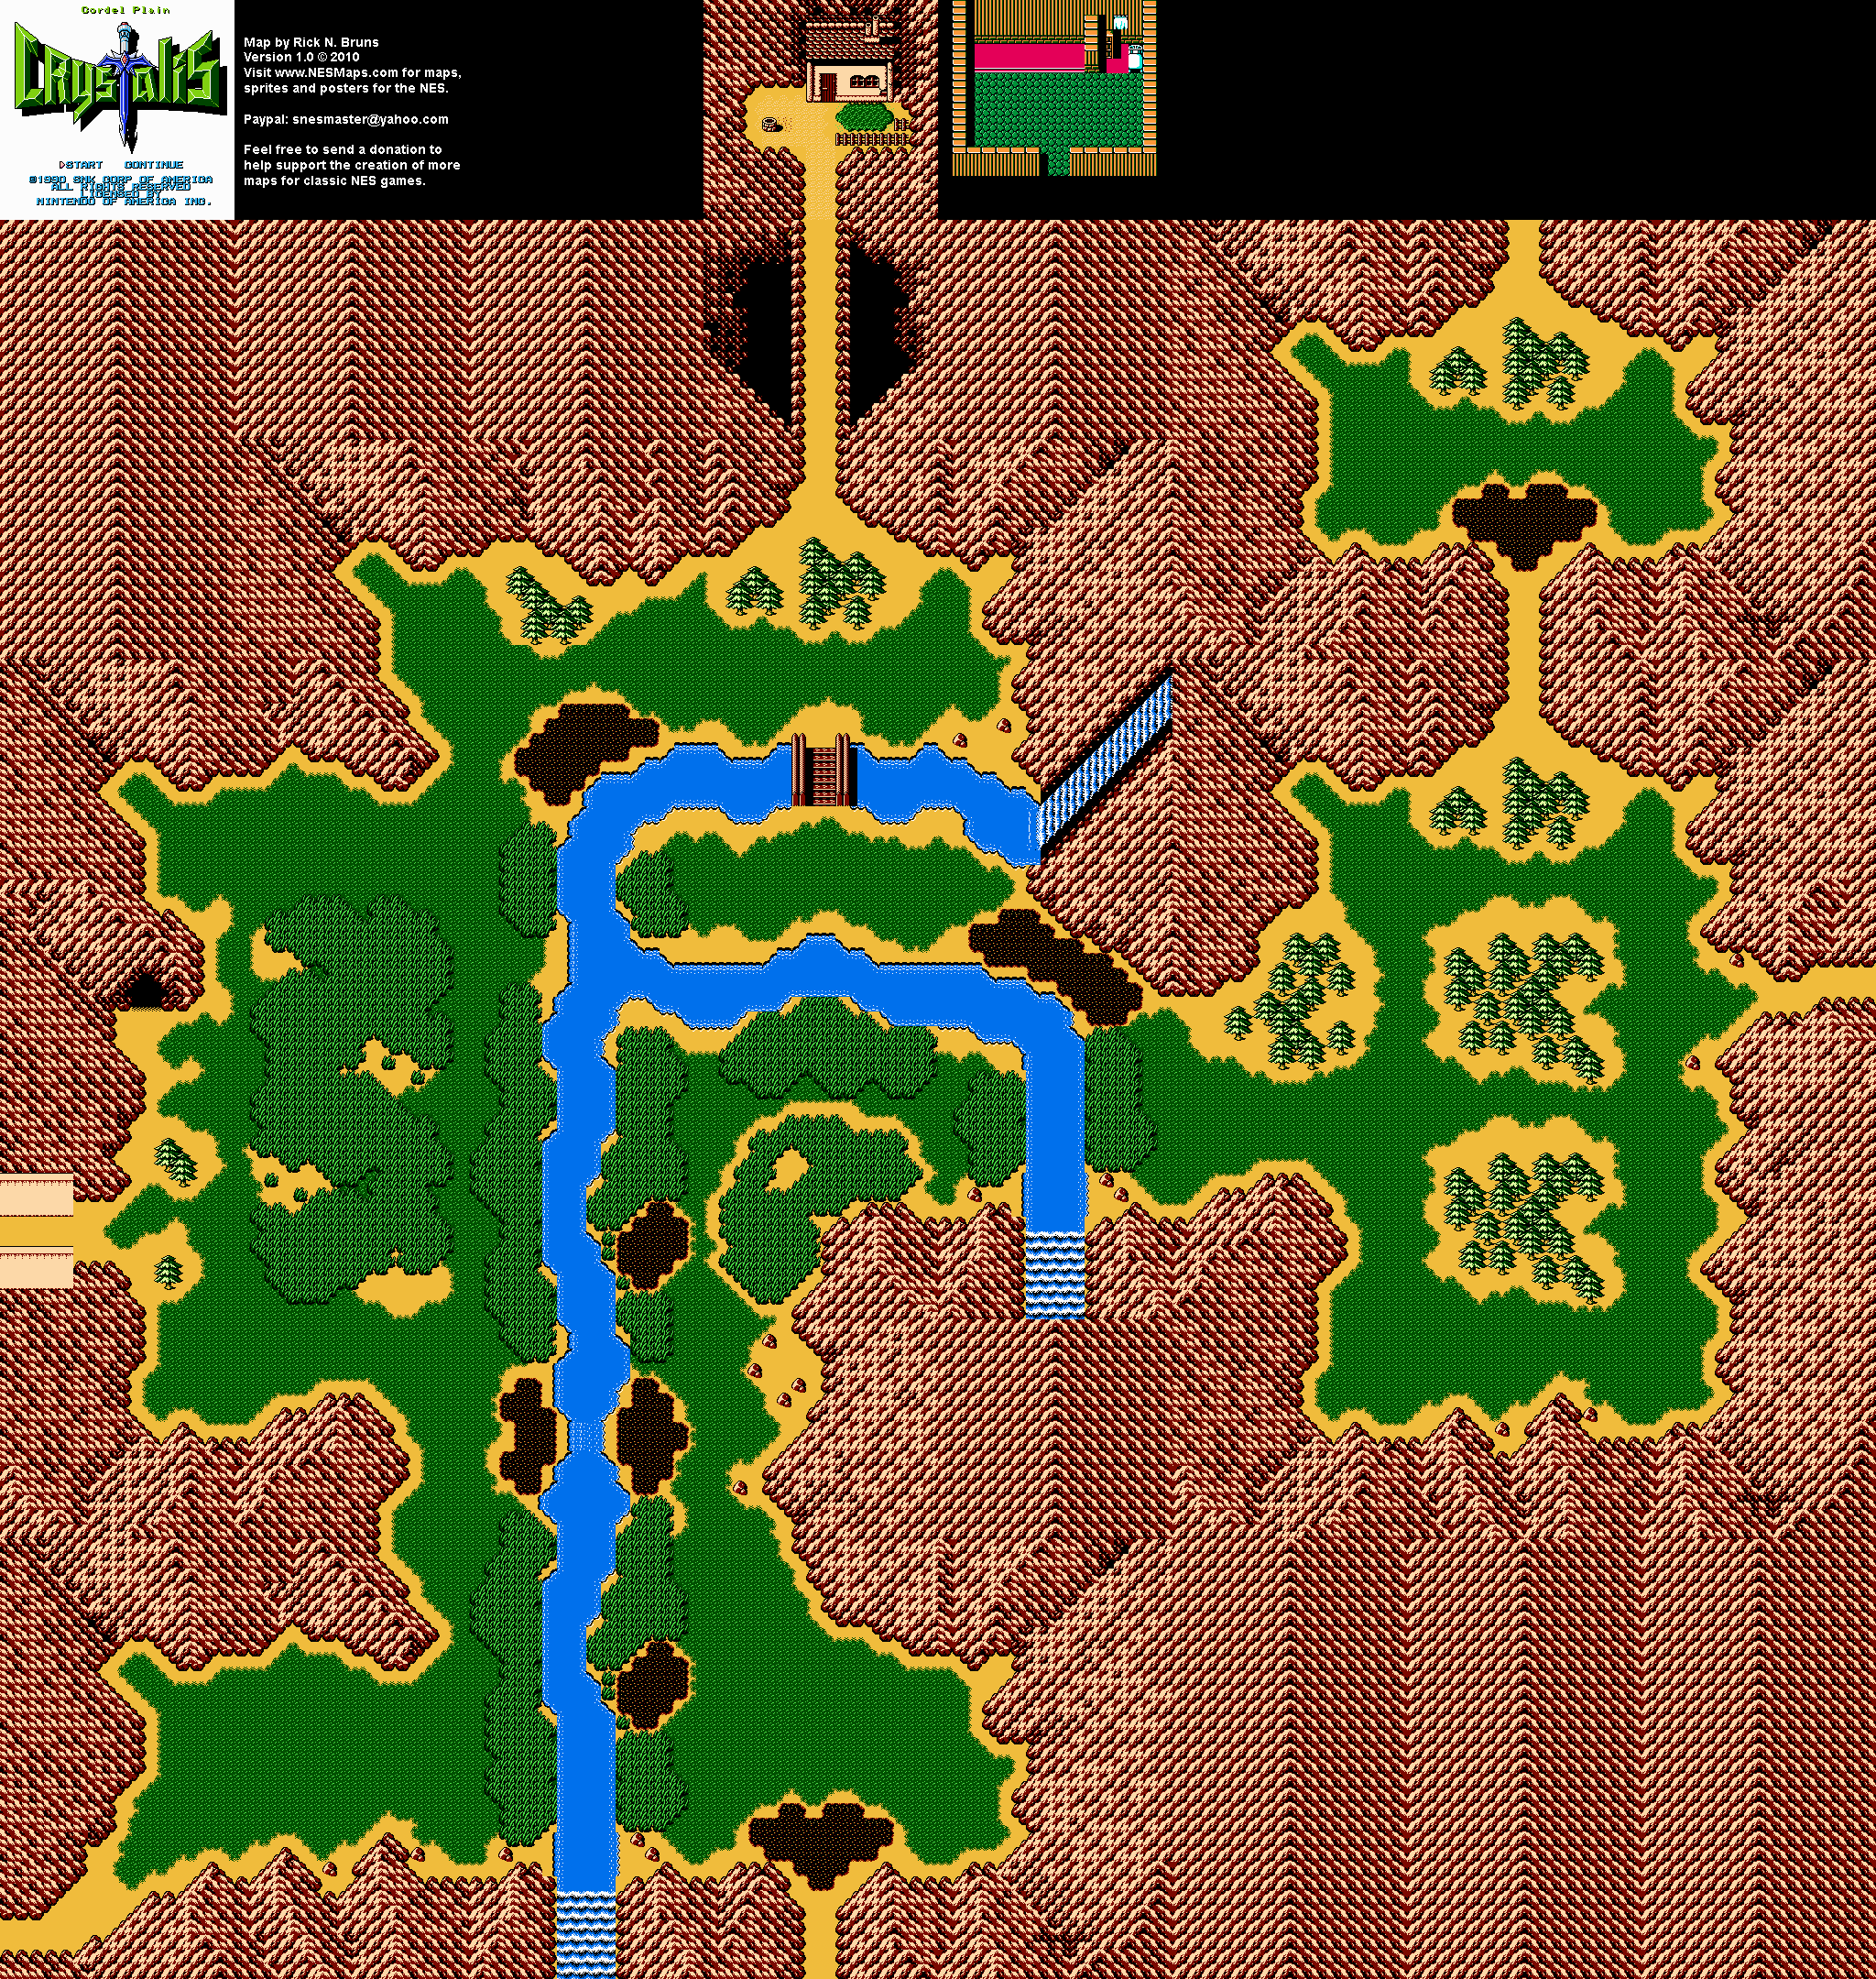 Crystalis - Cordel Plain Nintendo NES Map BG